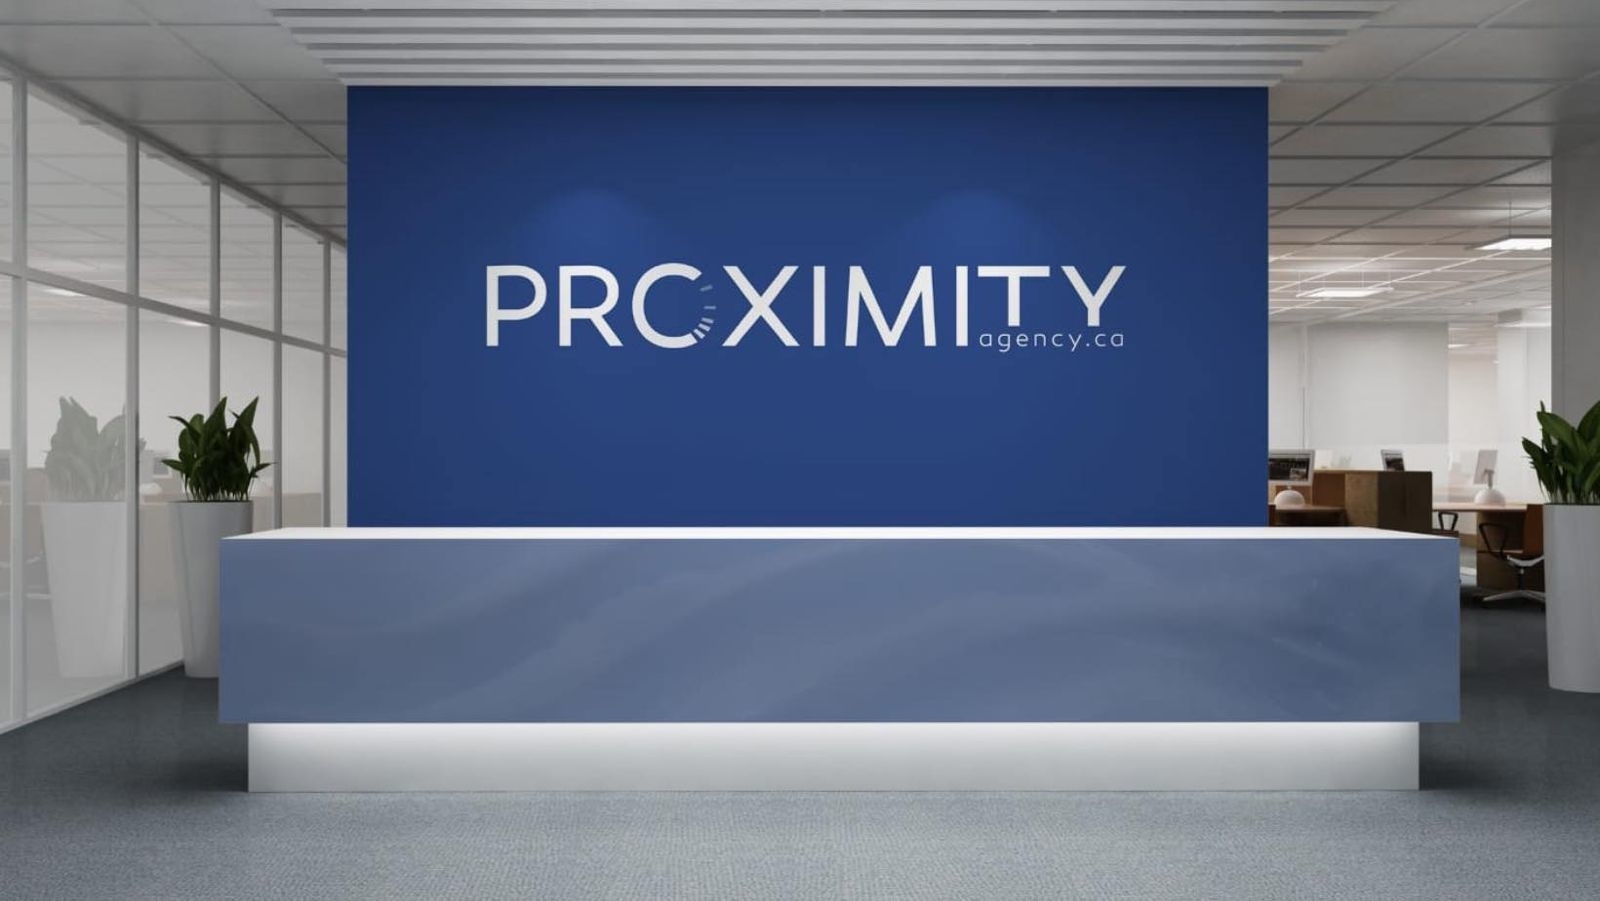 Proximity agency - Conseillers en marketing